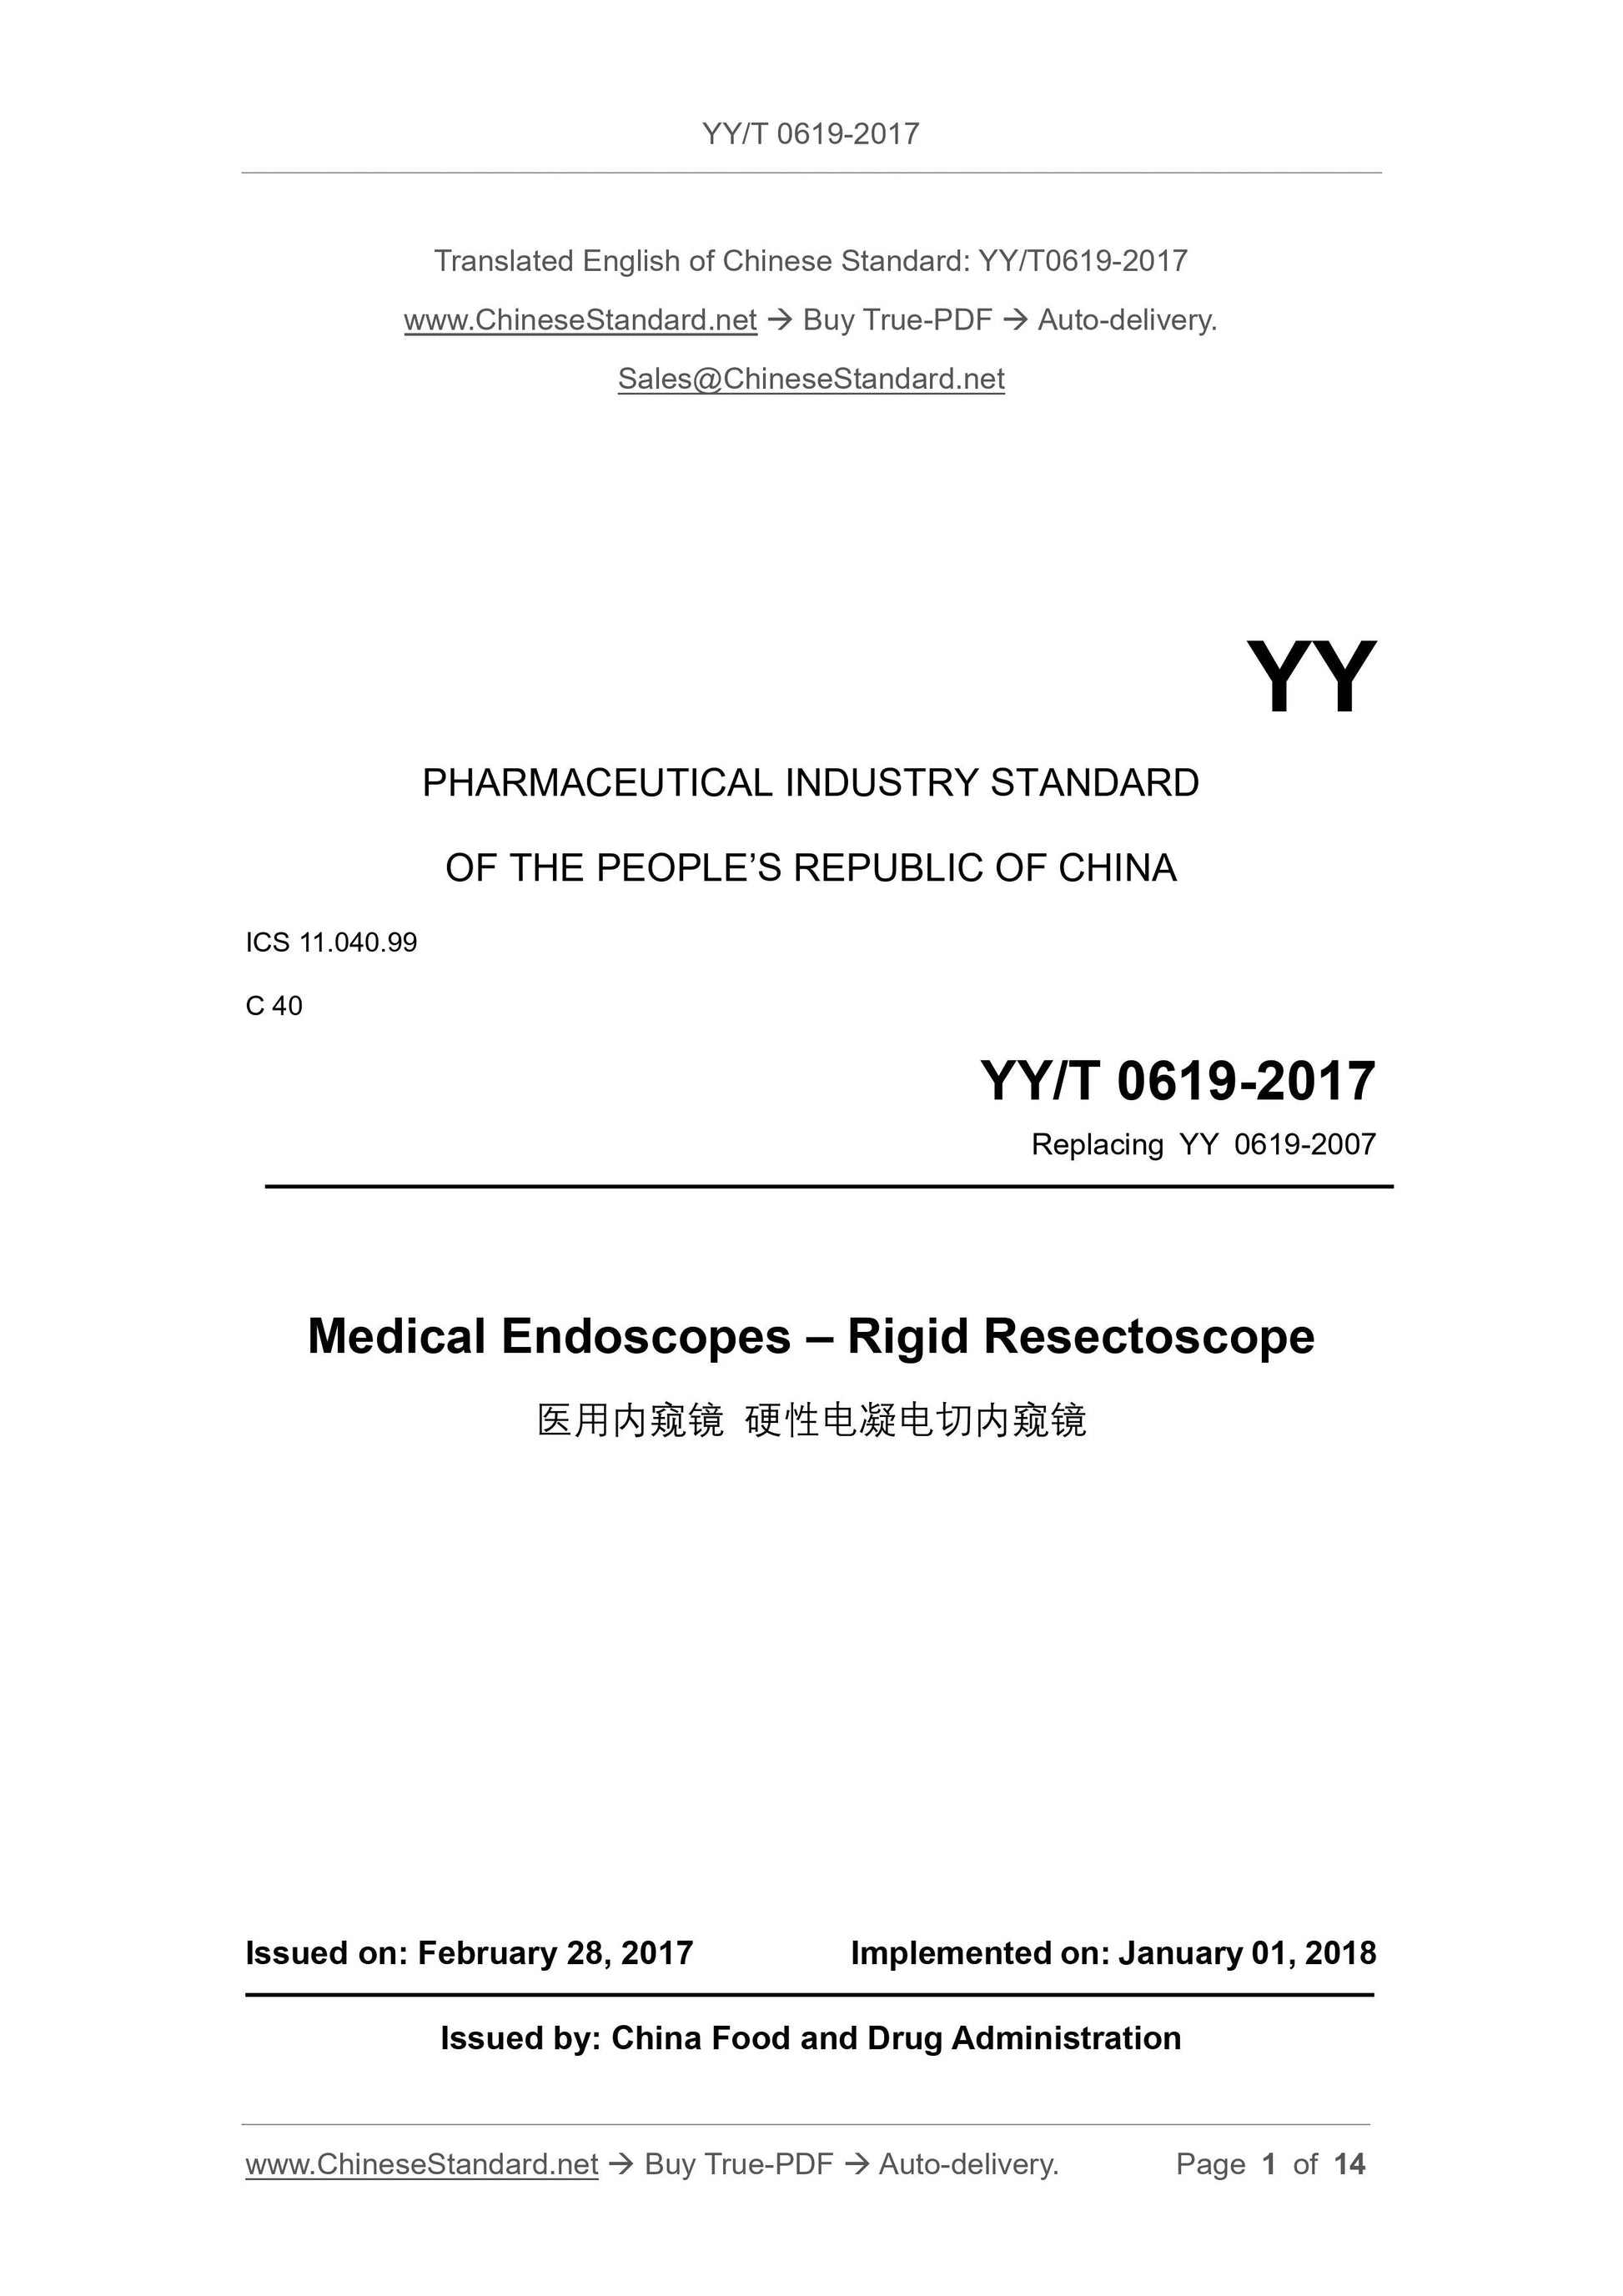 YY/T 0619-2017 Page 1